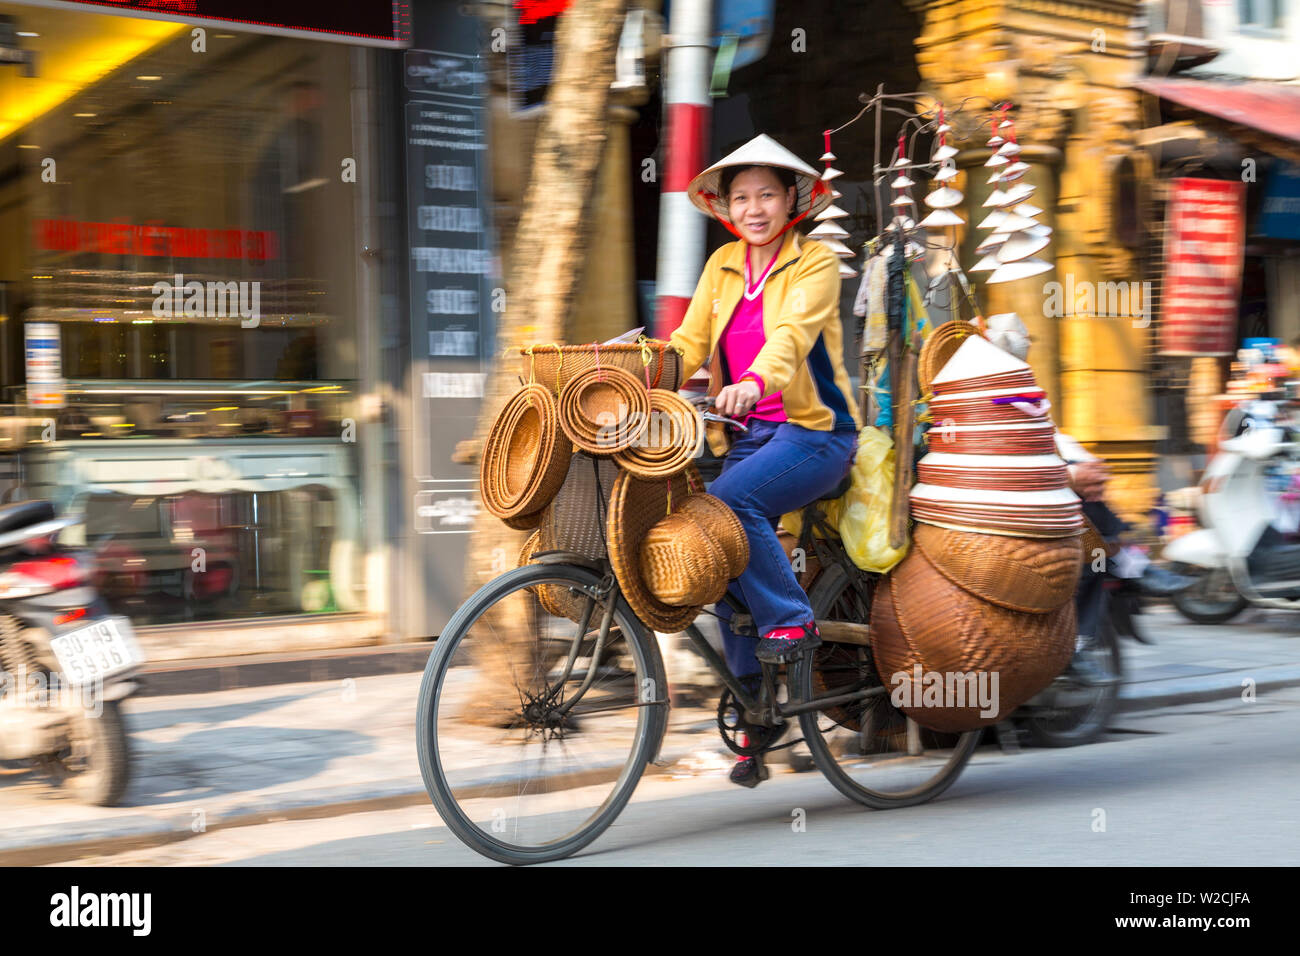 Basket & hat seller on bicycle, Hanoi, Vietnam Stock Photo